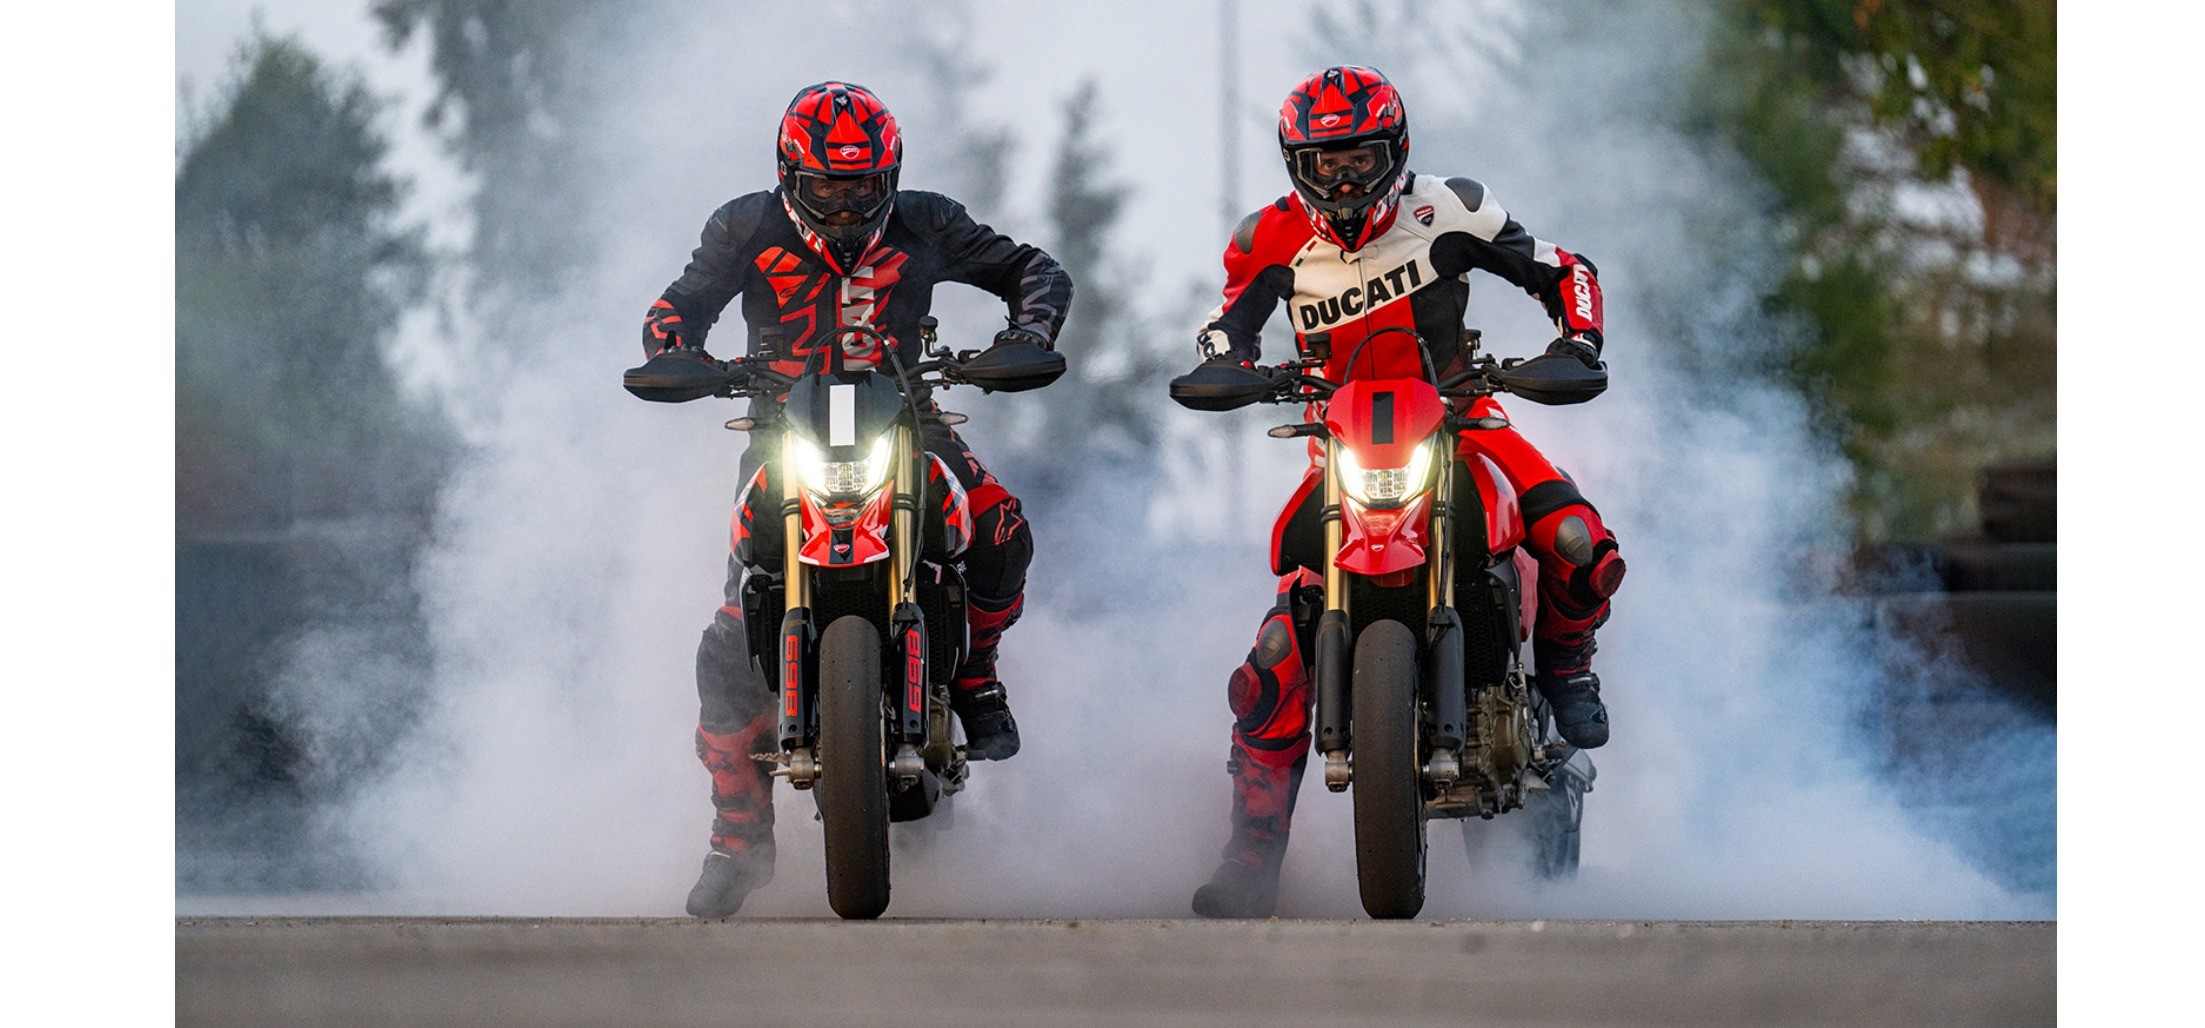 Ducati Hypermotard 698 Mono: the new benchmark for road Supermotards